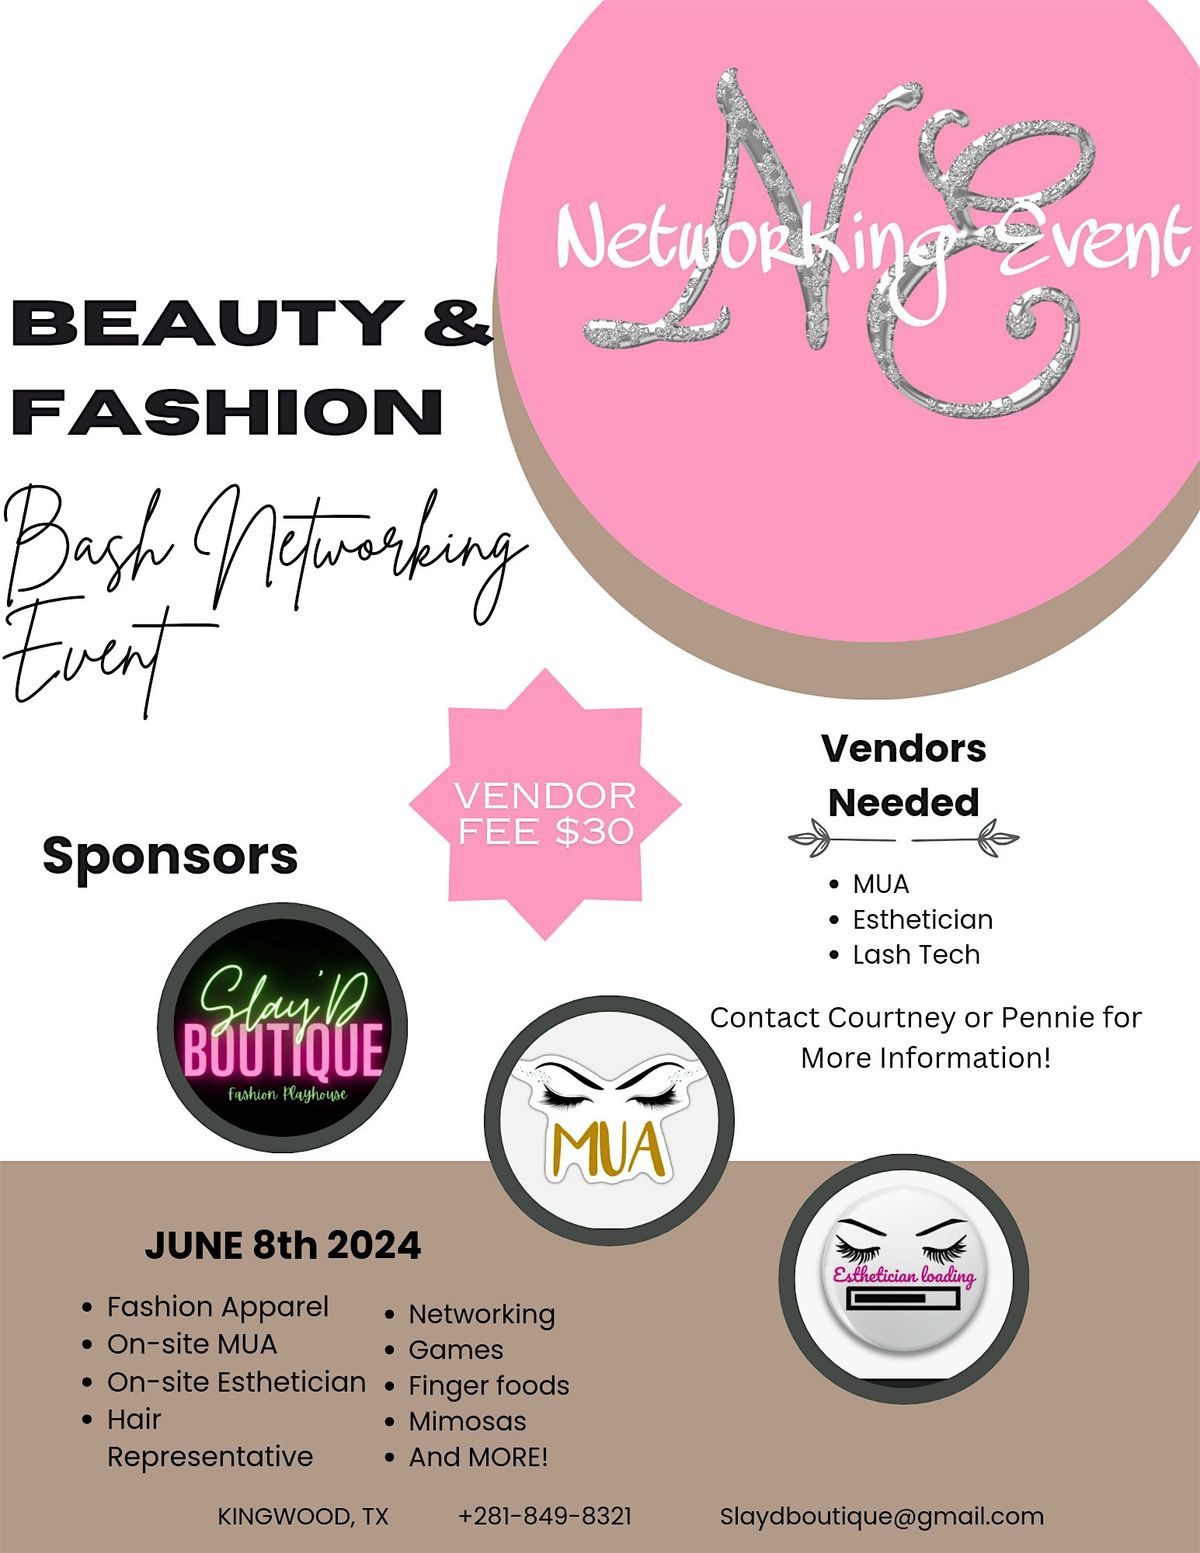 Beauty & Fashion Bash Networking Event